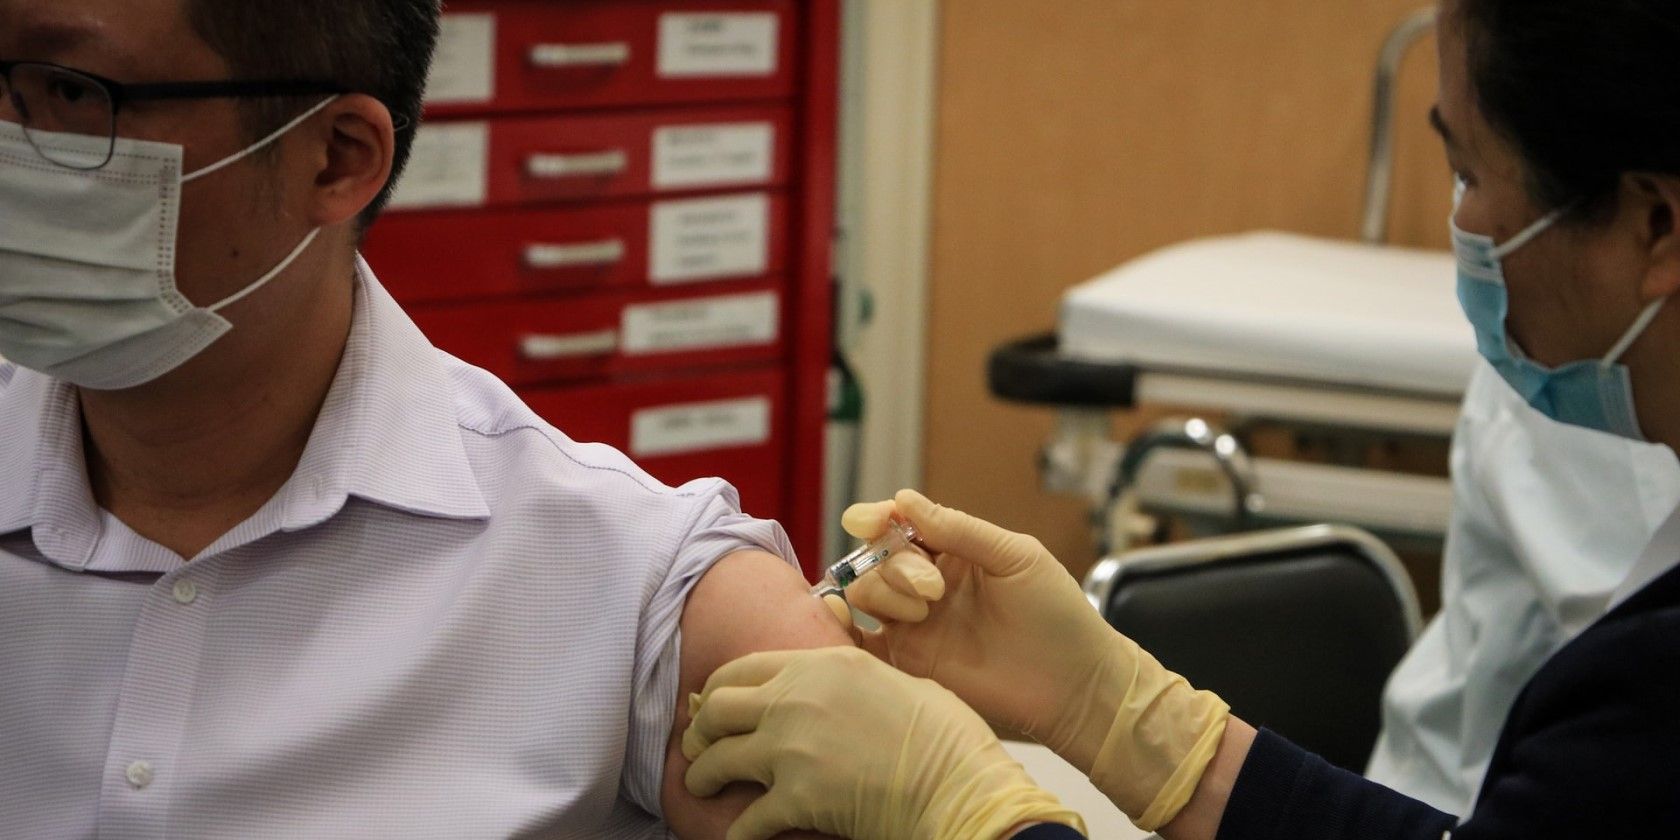 A person getting a vaccine